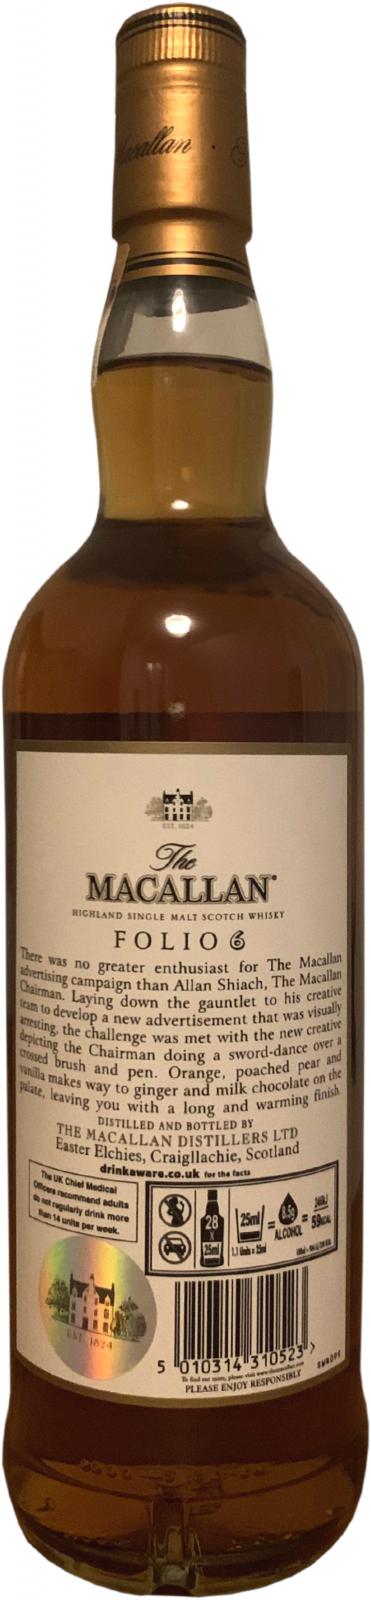 Macallan Folio 6